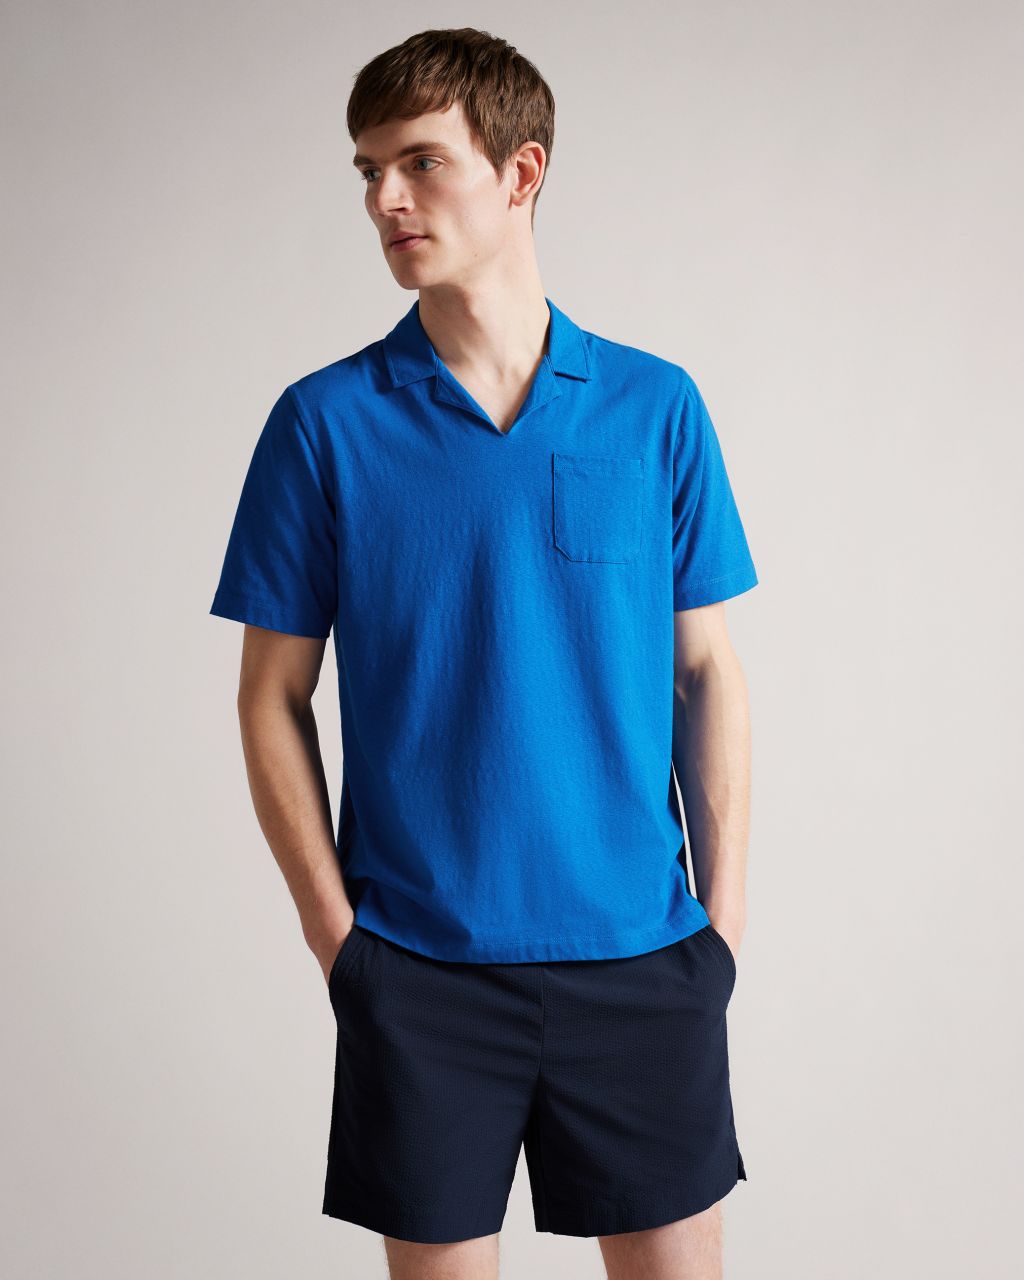 Ted Baker Men's Short Sleeve Revere Collar Polo Shirt in Medium Blue, Sntbees